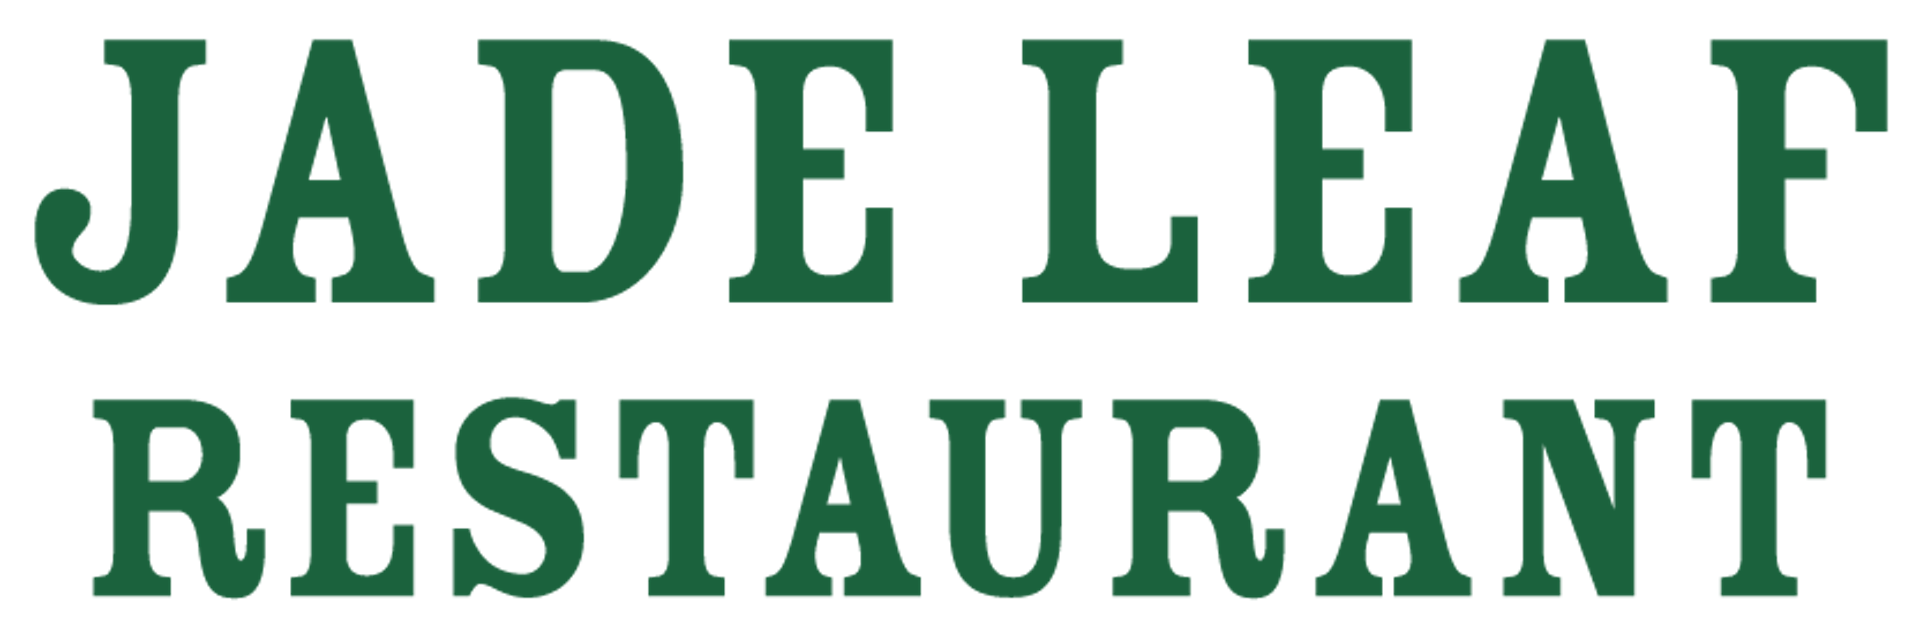 Jade Leaf Restaurant